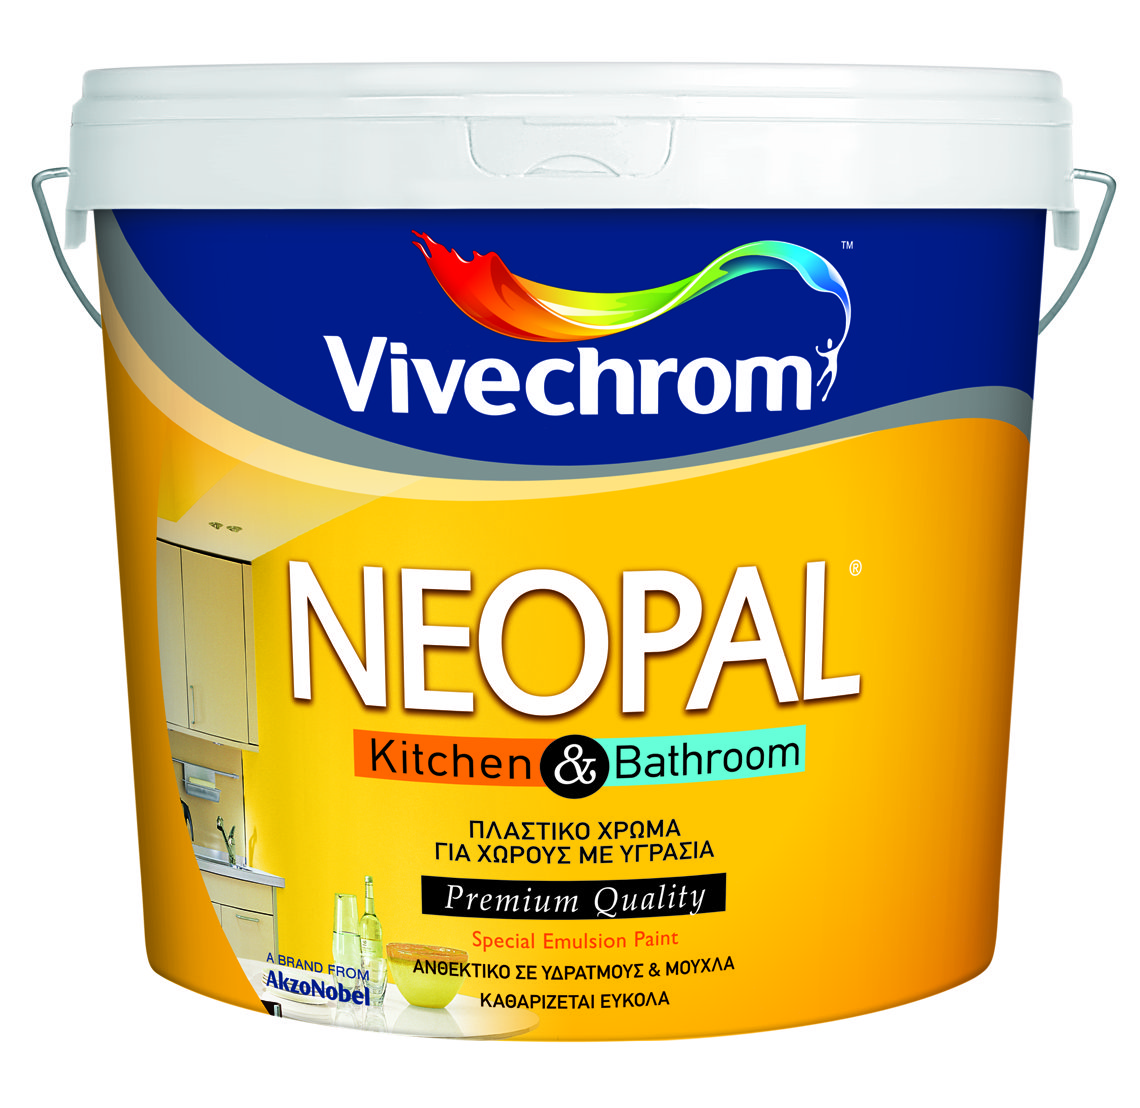 Vivechrom Neopal Kitchen & Bathroom White 750ml